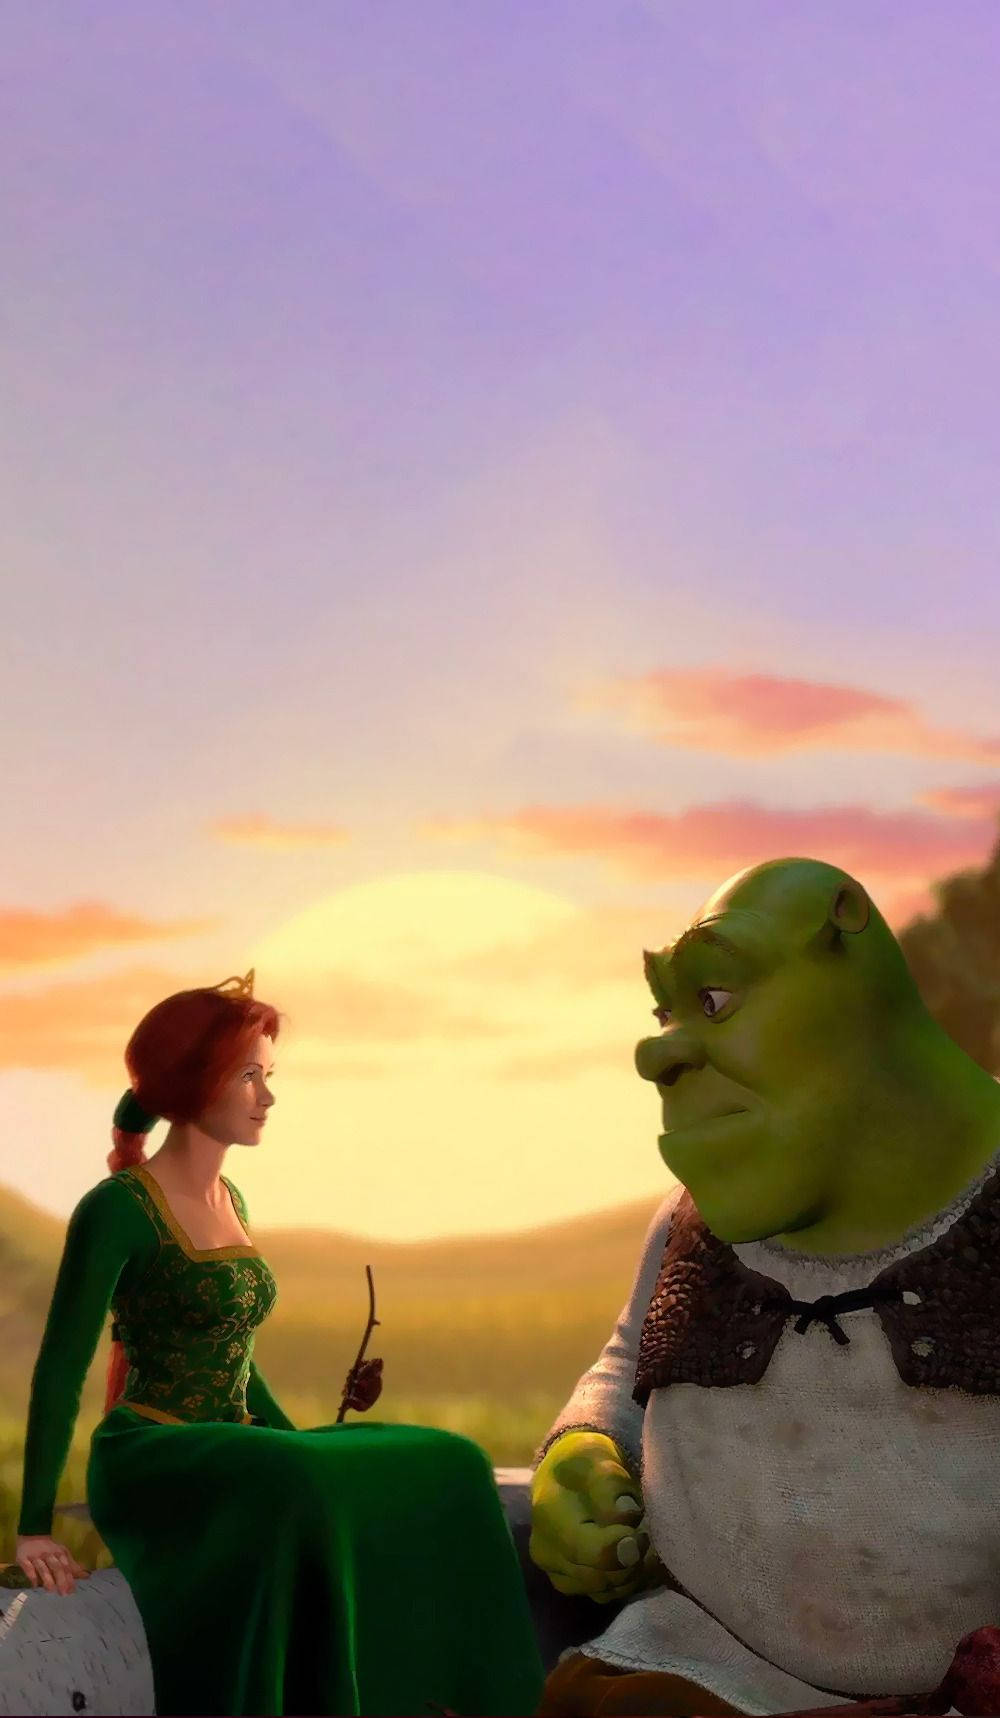 Shrek And Fiona Sunset Background